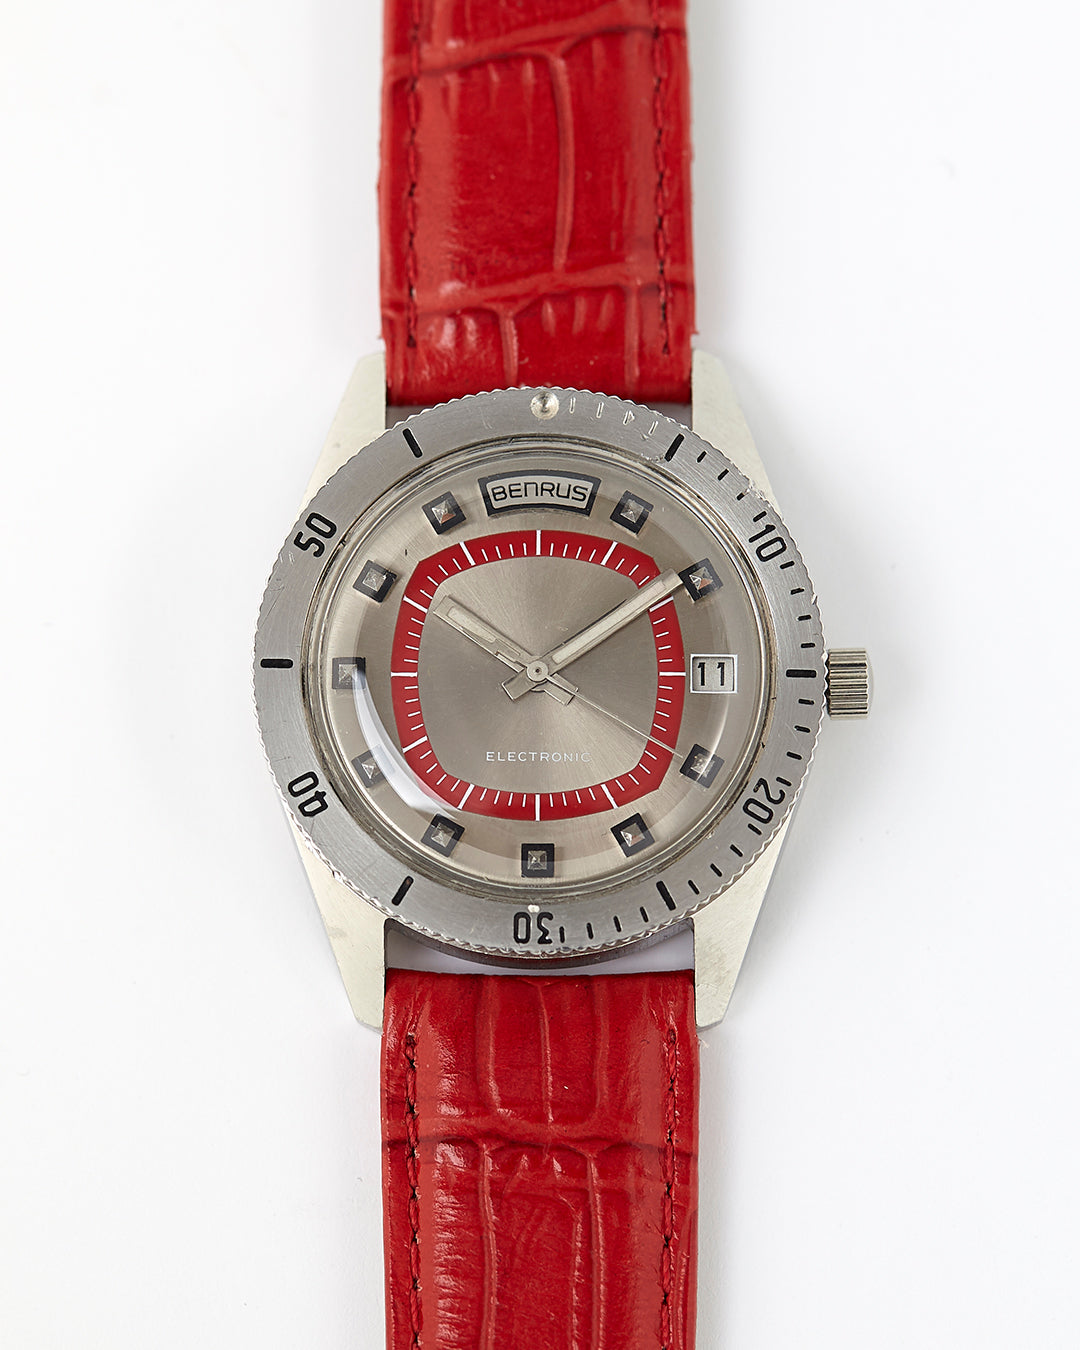 Benrus Sport Citation vintage wristwatch on red alligator strapBenrus Citation Vintage Electronic Wristwatch c.1970s